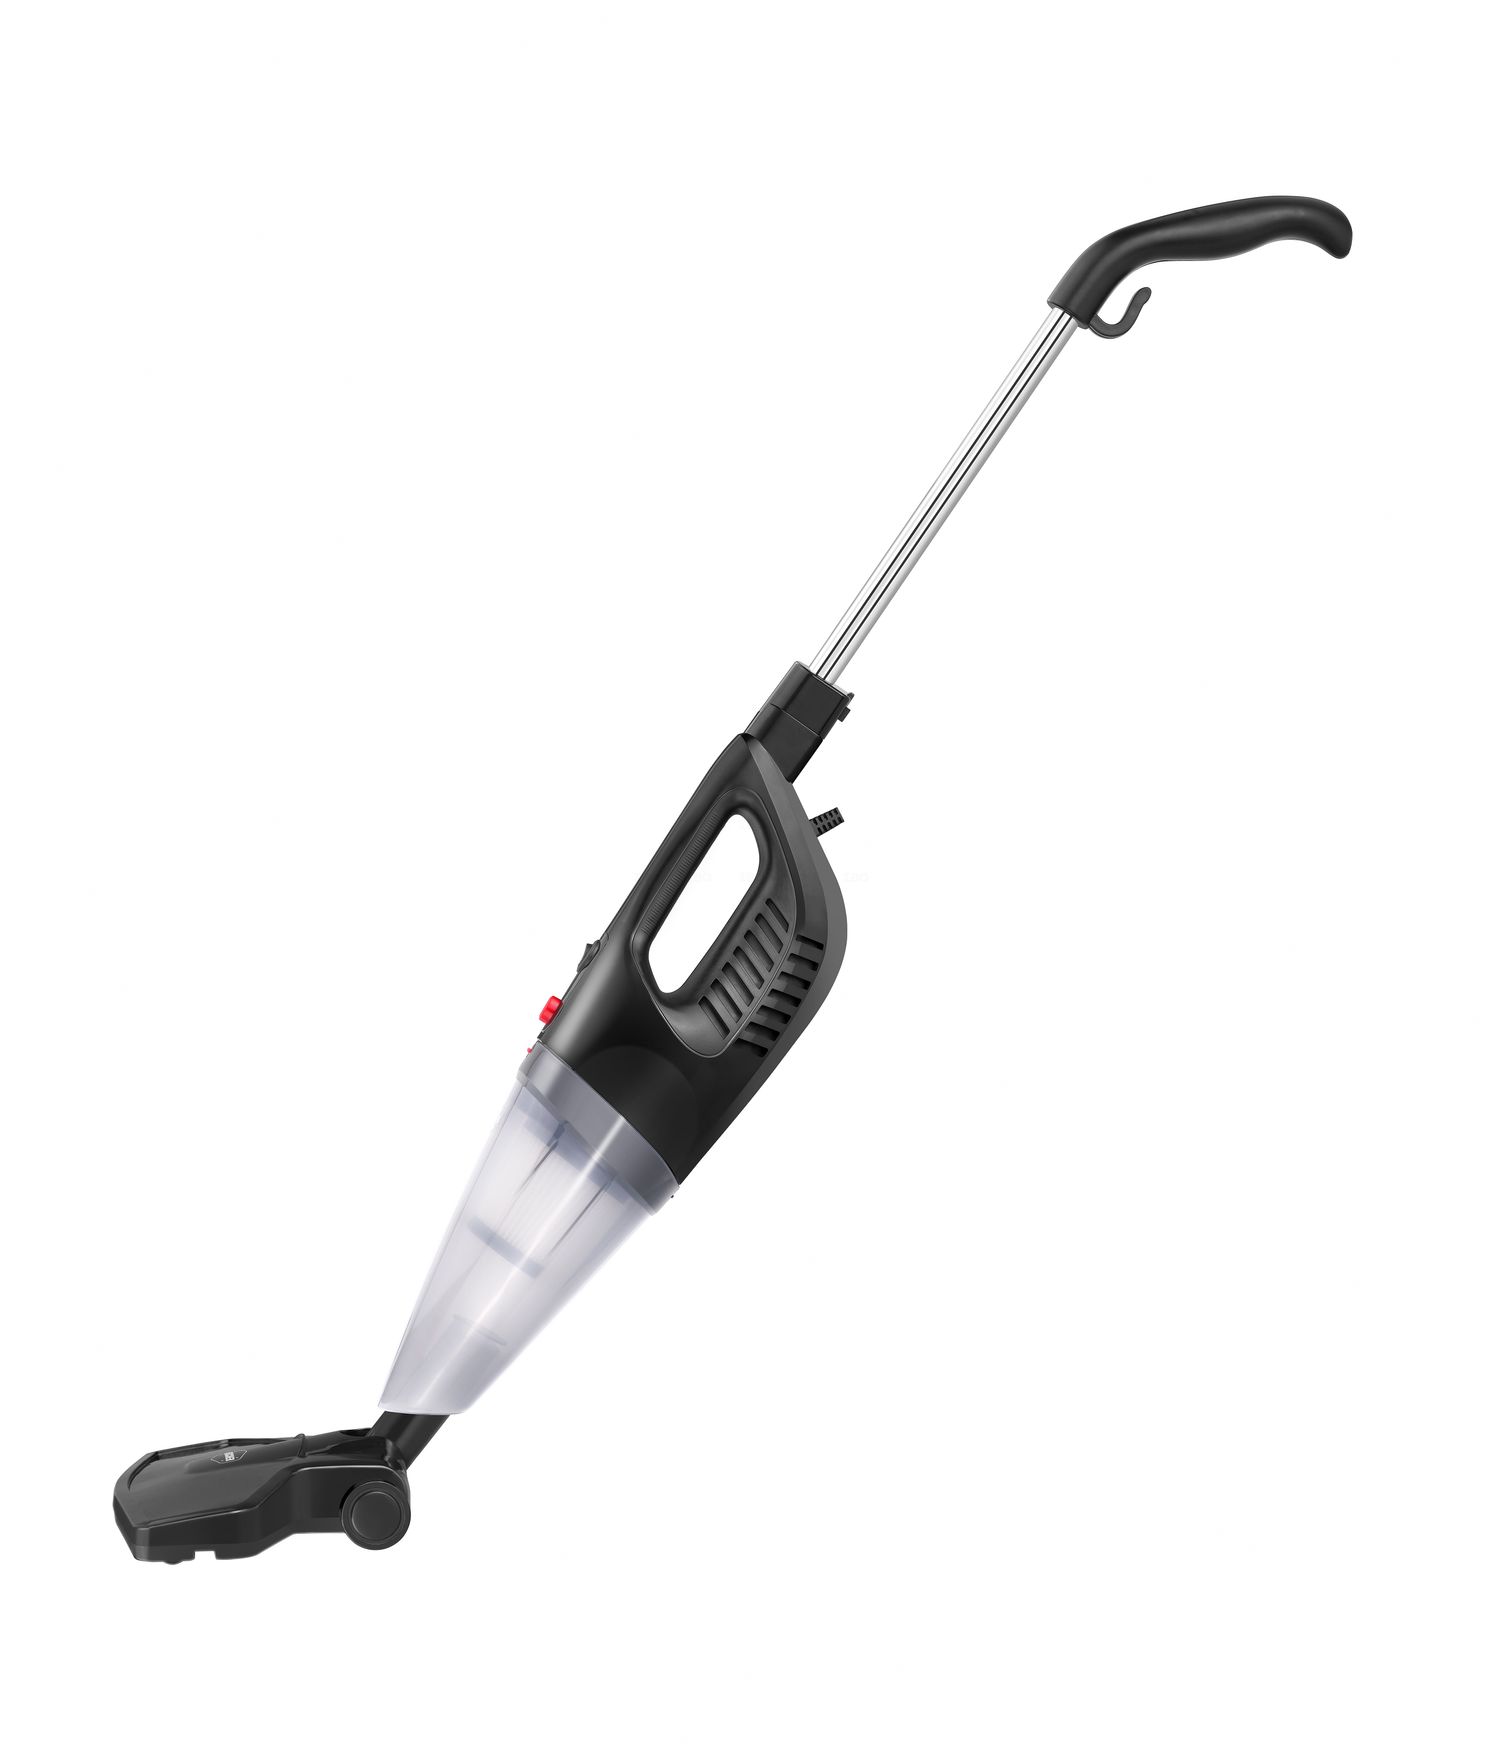 Woscher 908K 800 W Upright 2 in 1 Home Vacuum Cleaner